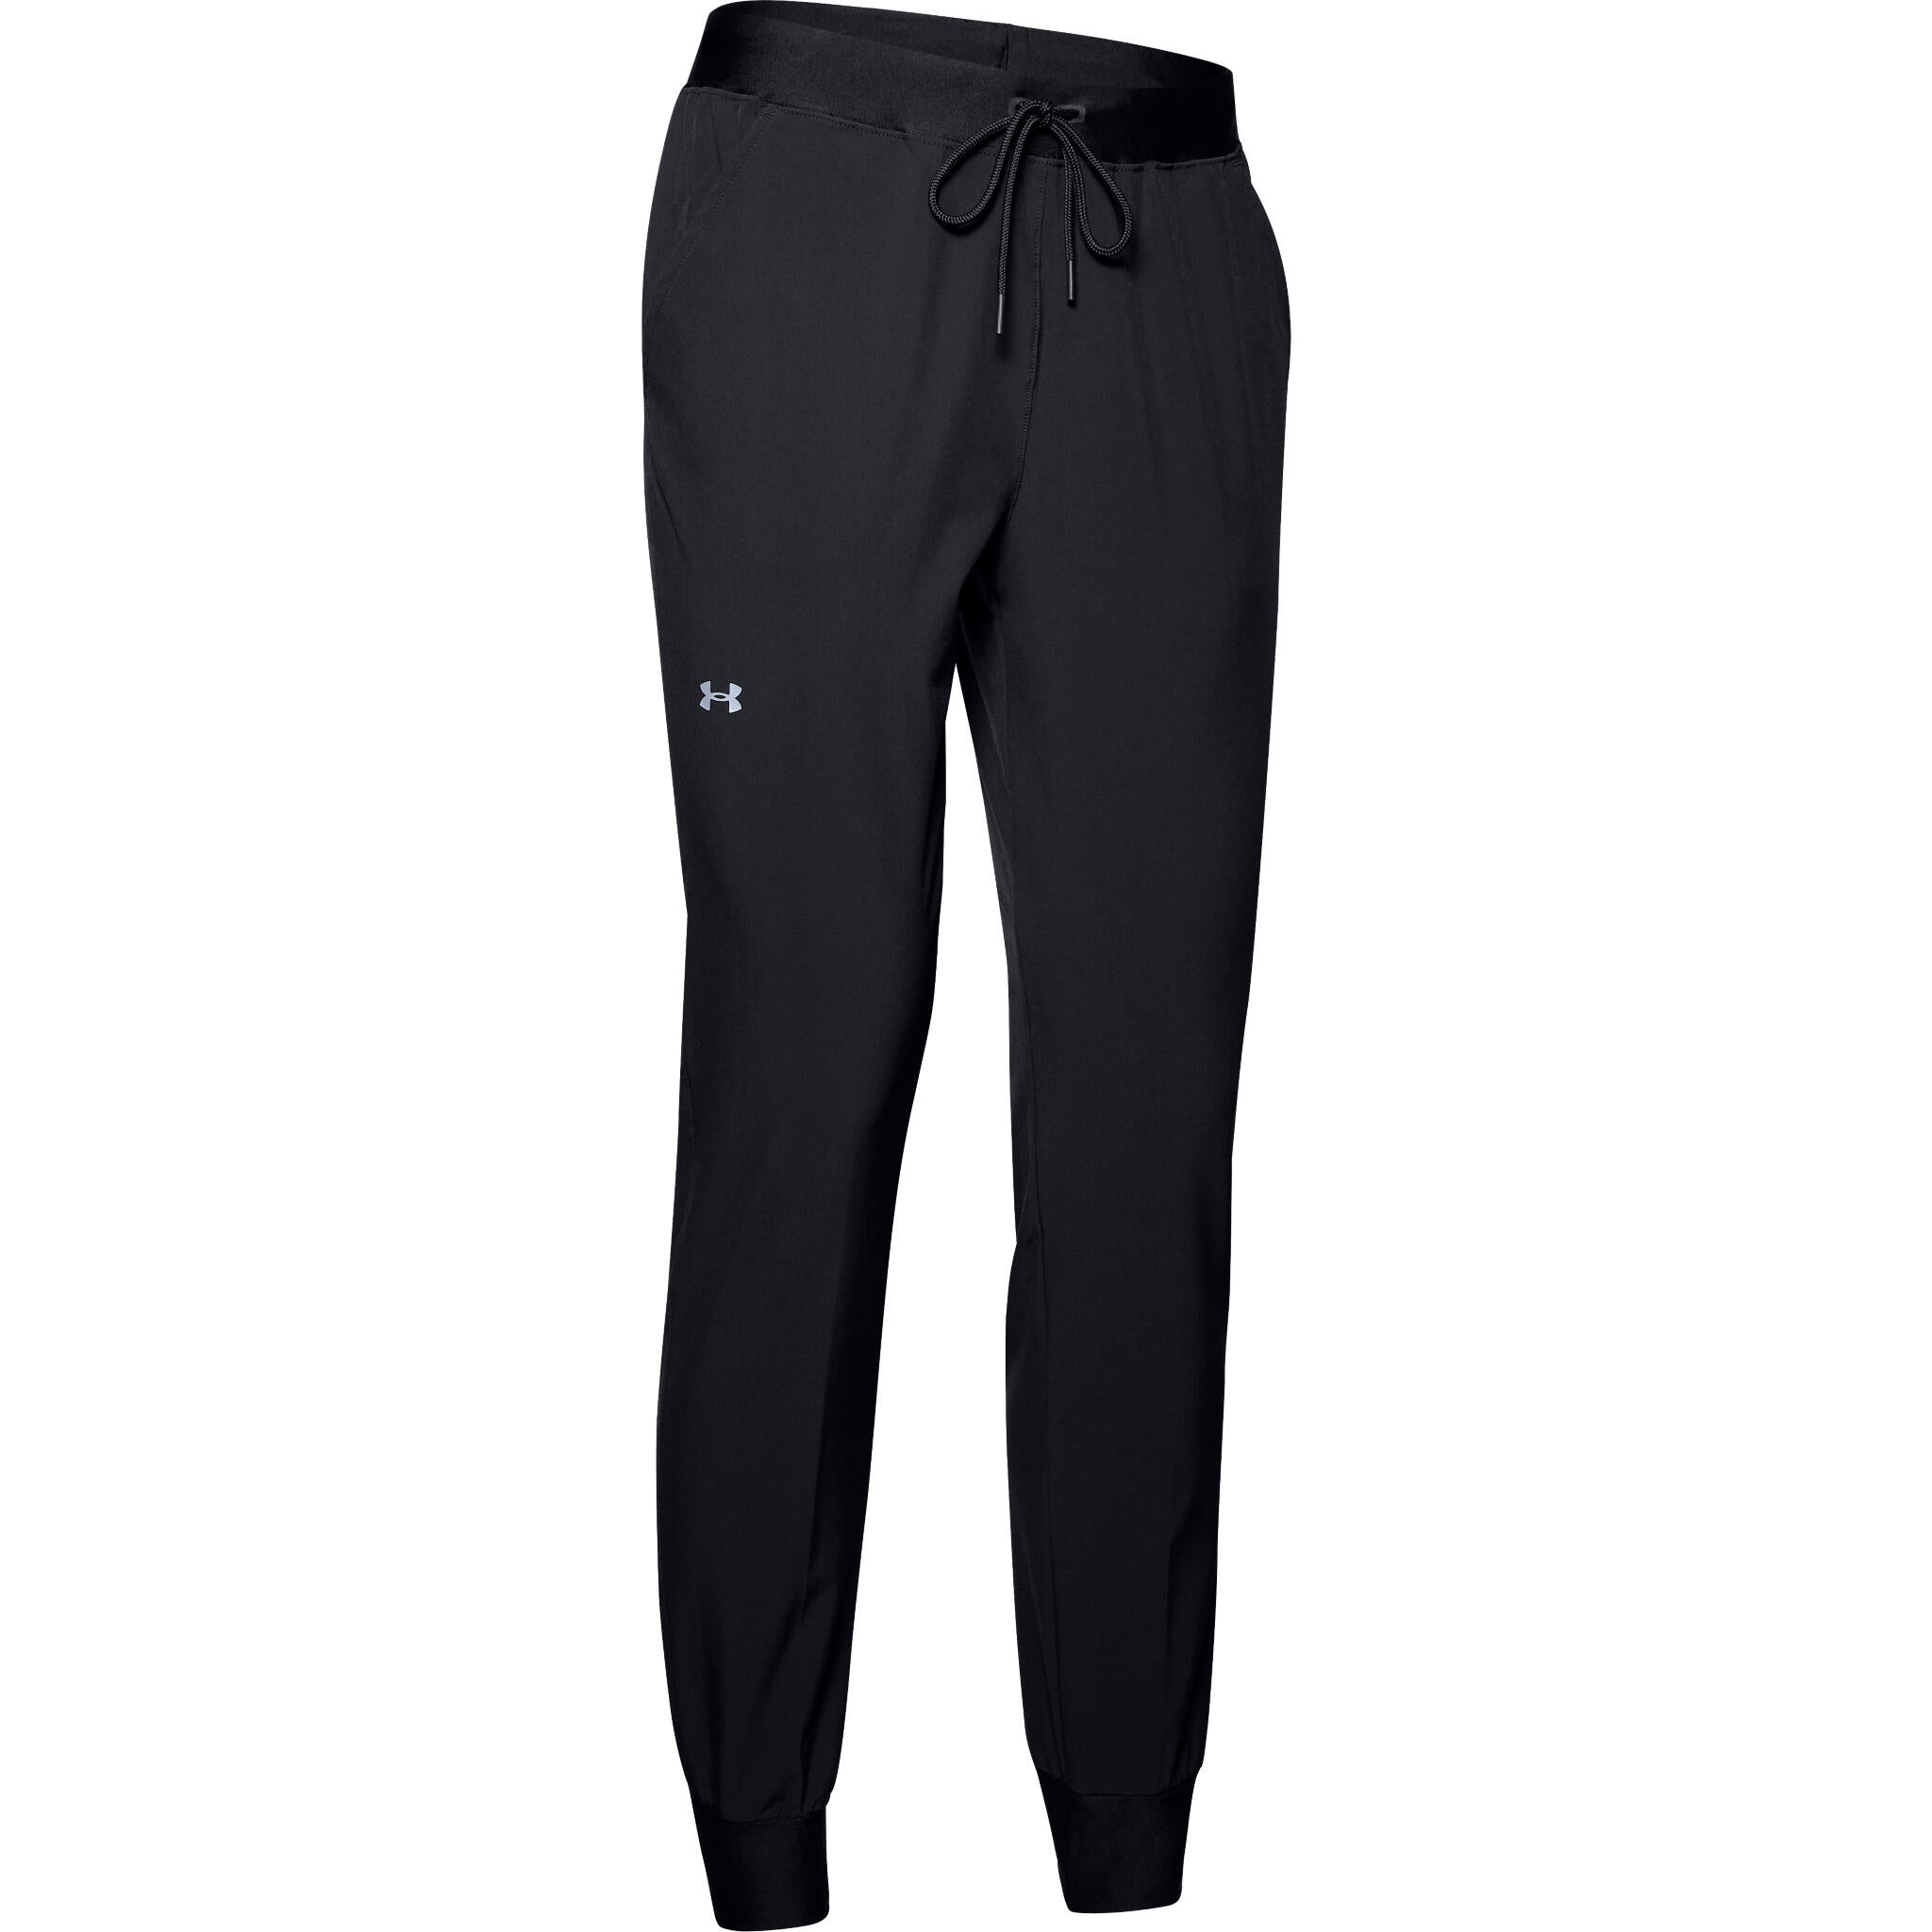 Under Armor Sport Woven Pant-Black / Women's Pants - Wintersport